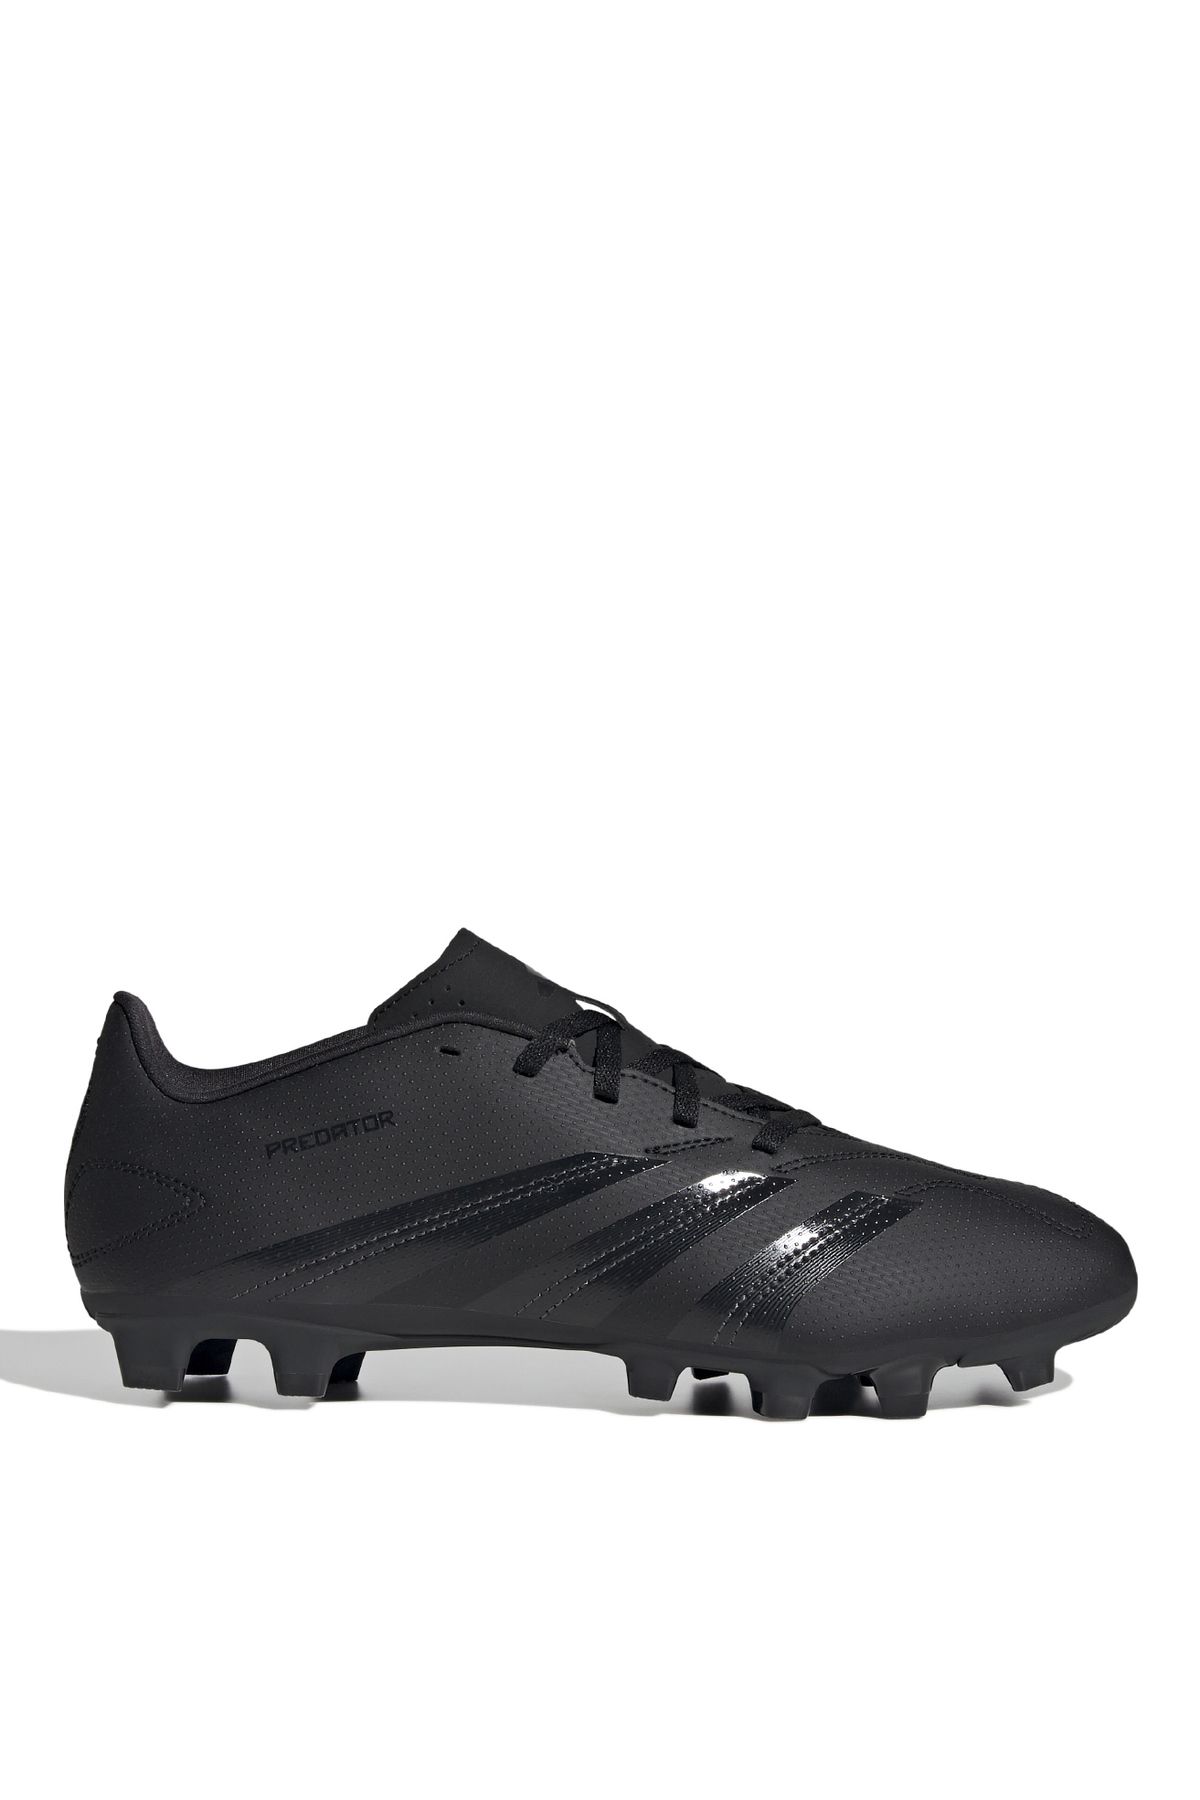 adidas Siyah Erkek Futbol Ayakkabısı IG7759 PREDATOR